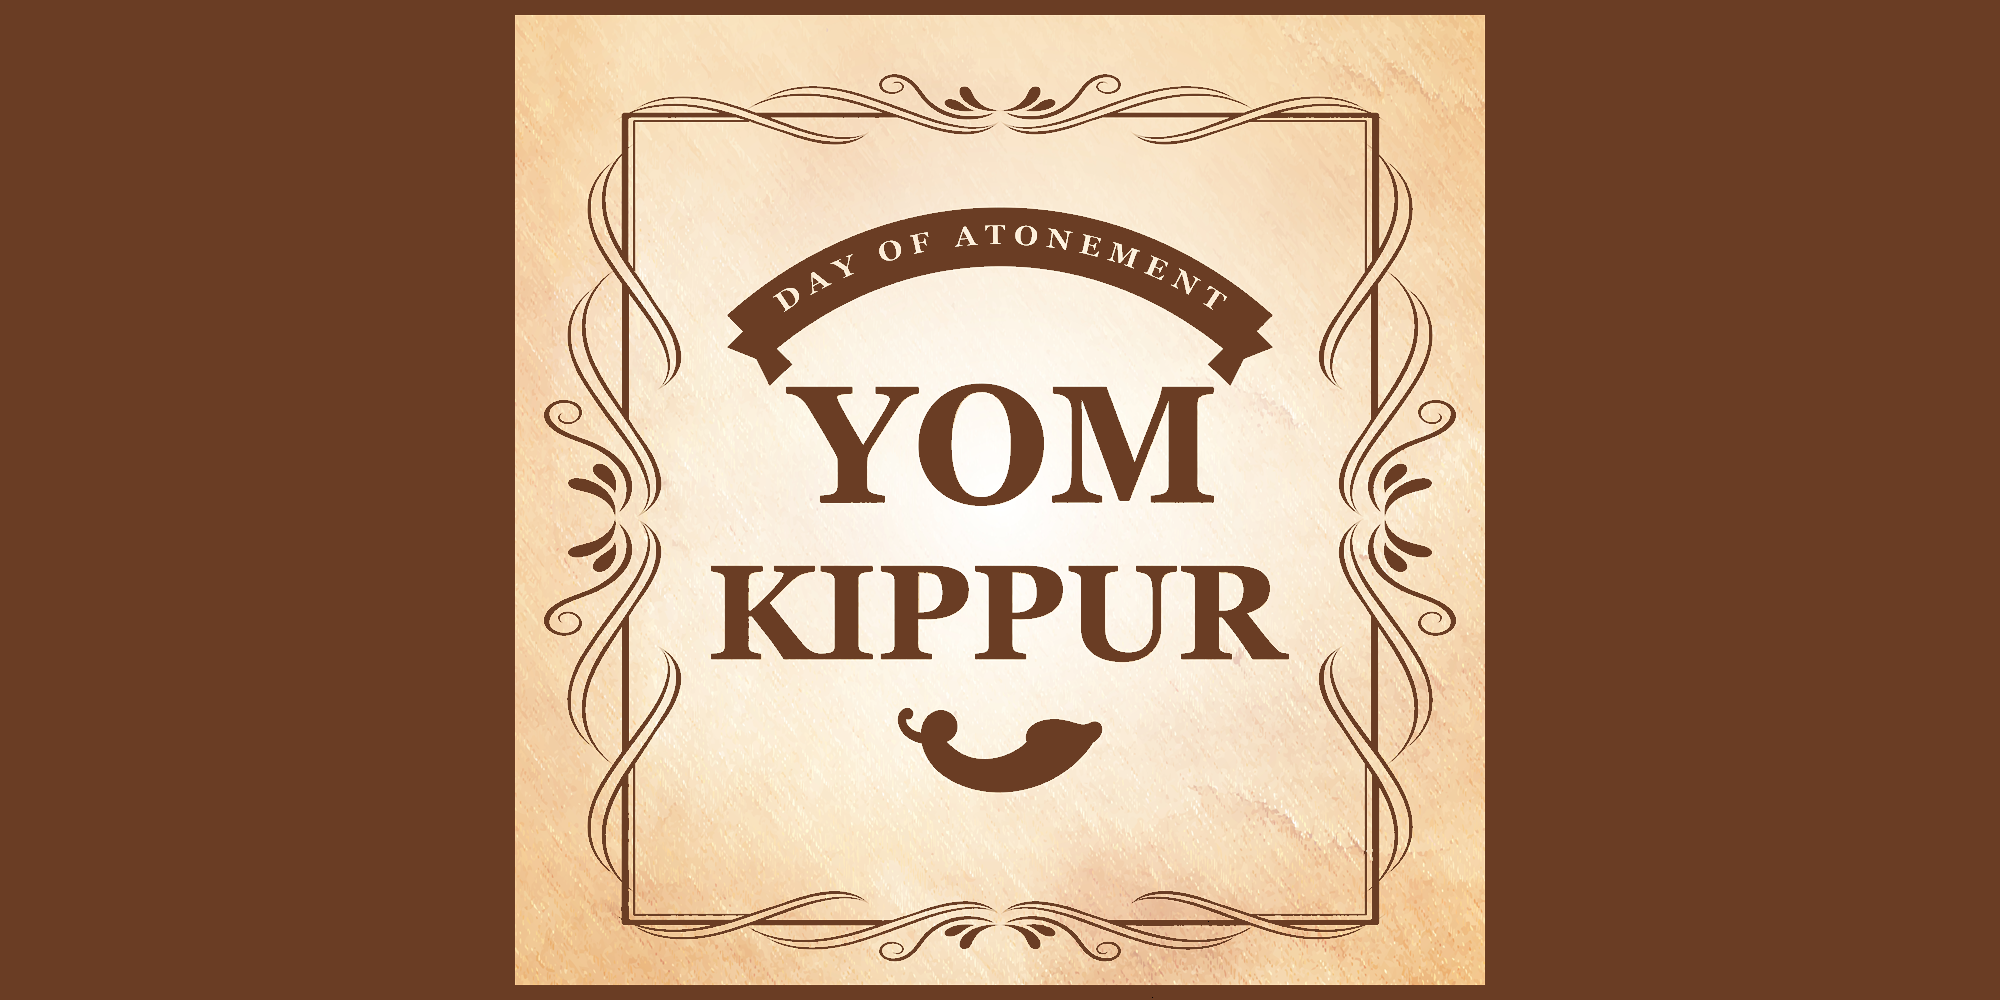 OverSoyed Fine Organic Products - Yom Kippur